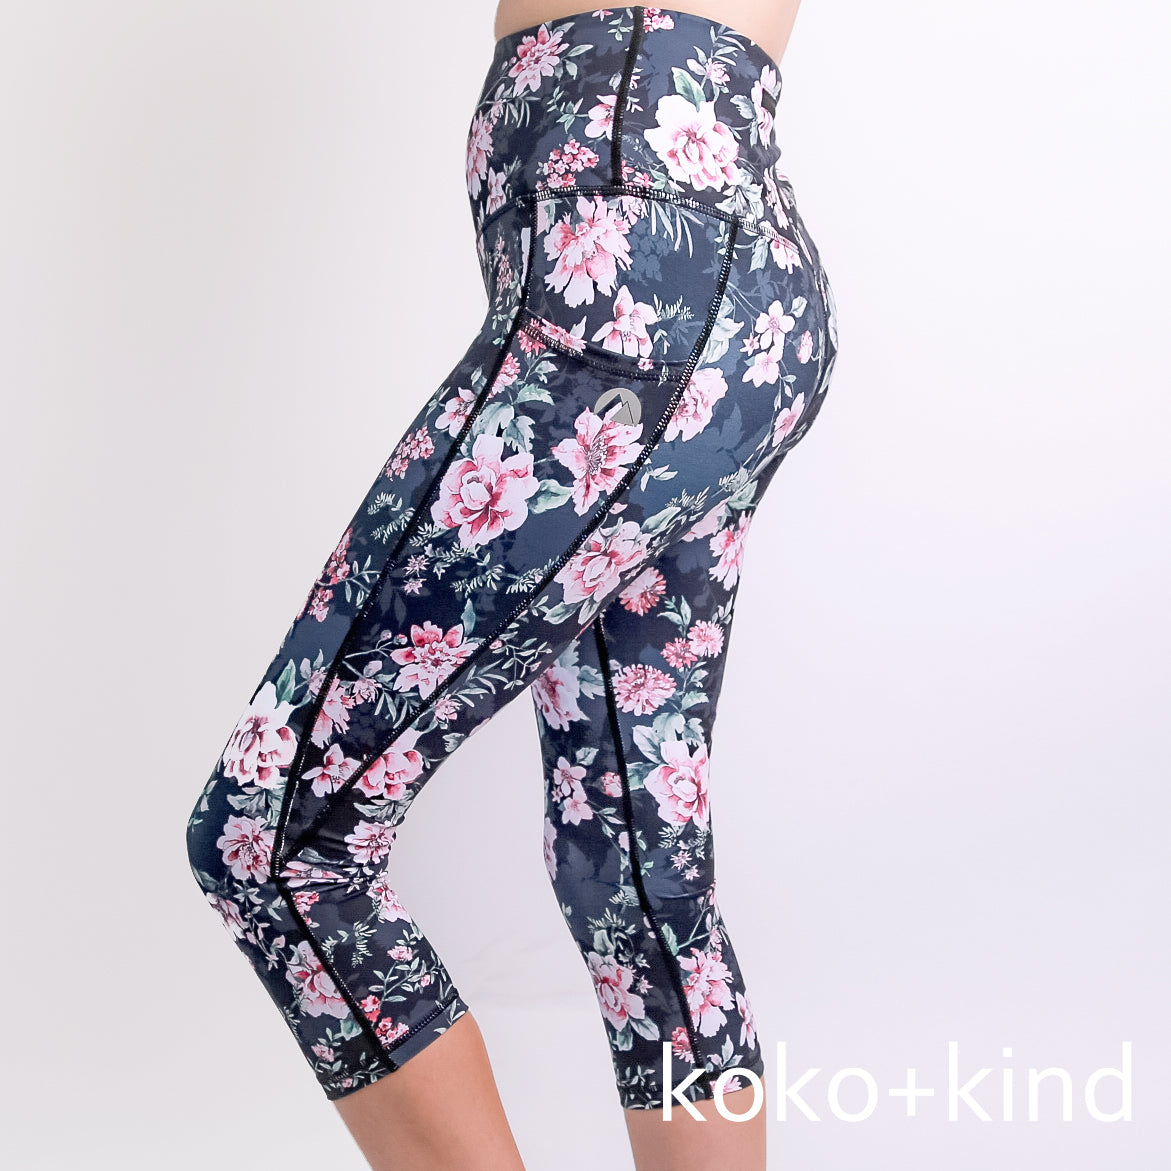 Women's Capri Leggings Floral Design High Waist Workout Pants